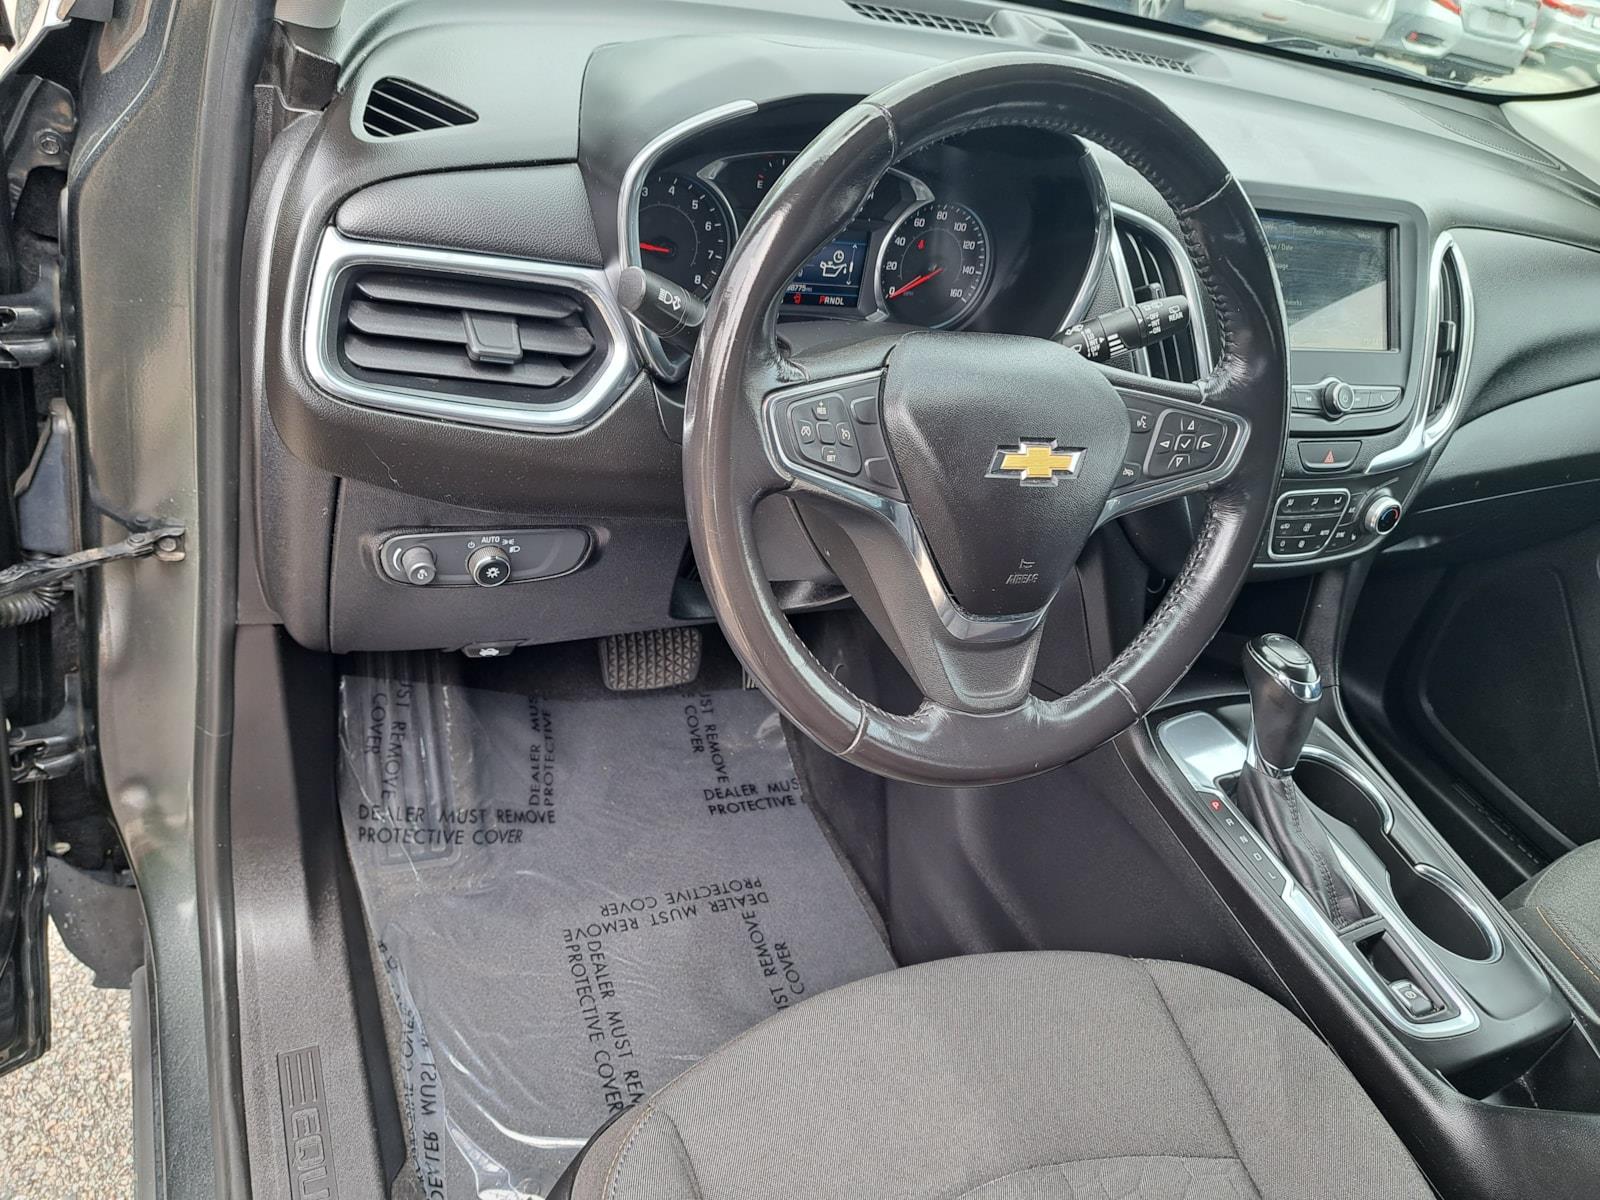 2019 Chevrolet Equinox LT SUV Front Wheel Drive 7